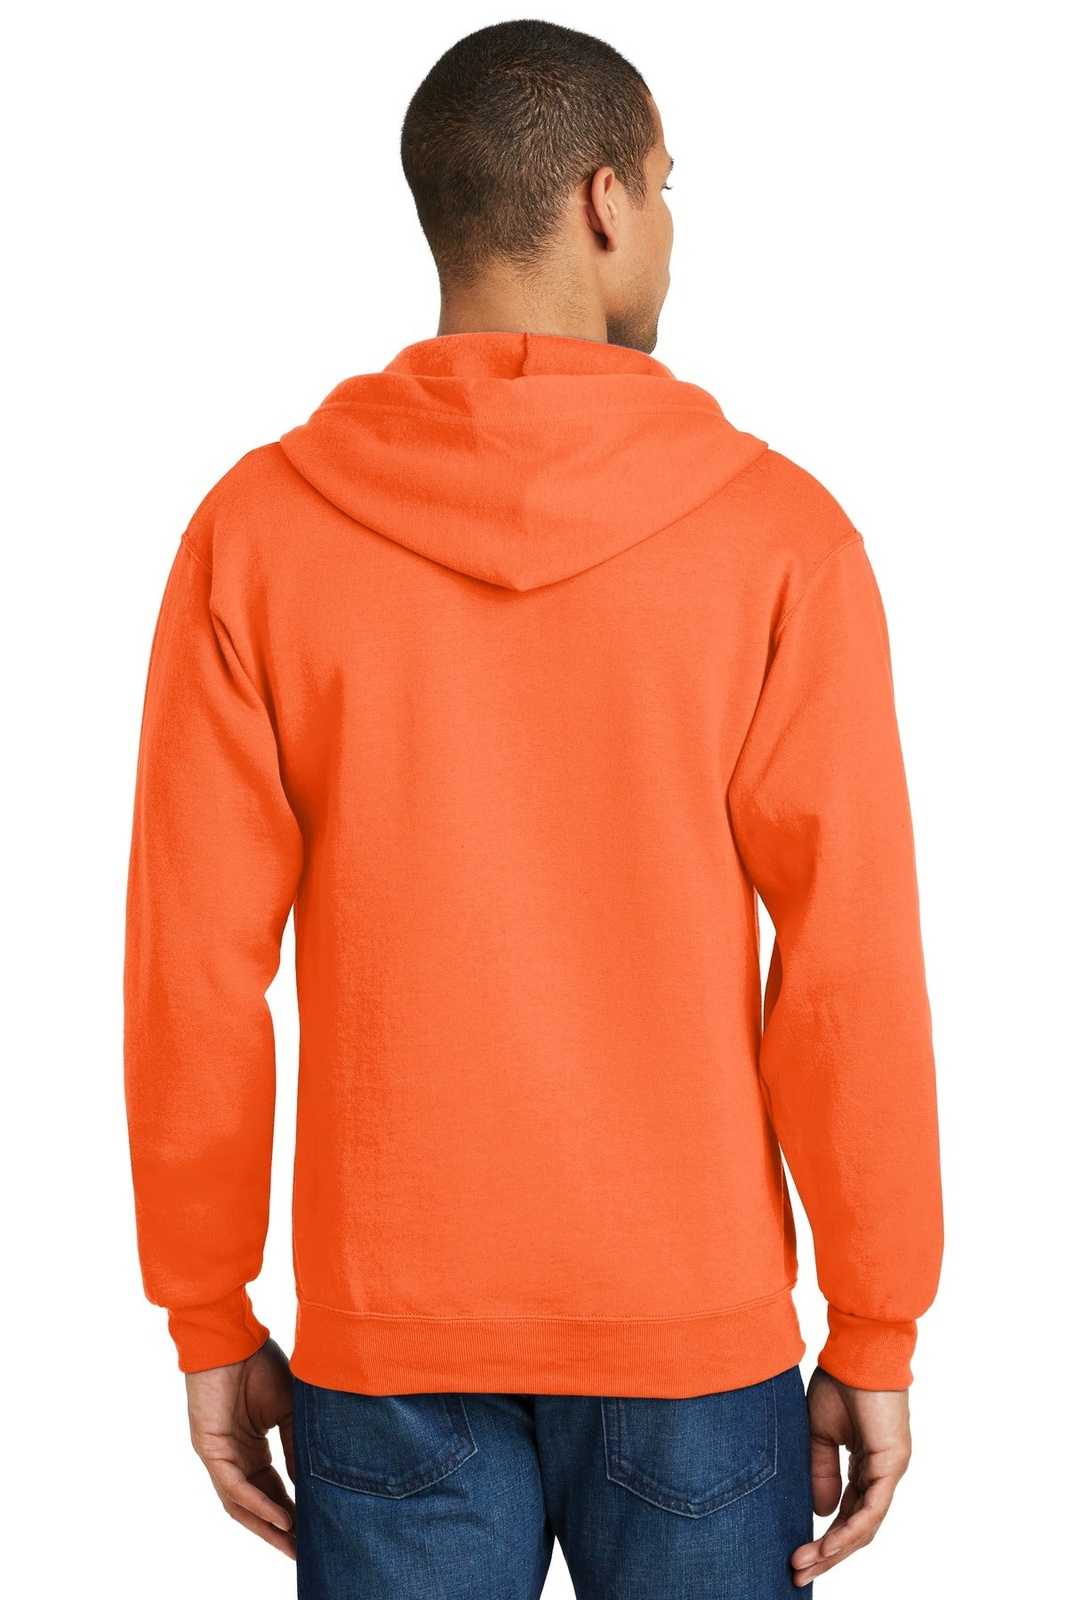 Jerzees 993M Nublend Full-Zip Hooded Sweatshirt - Safety Orange - HIT a Double